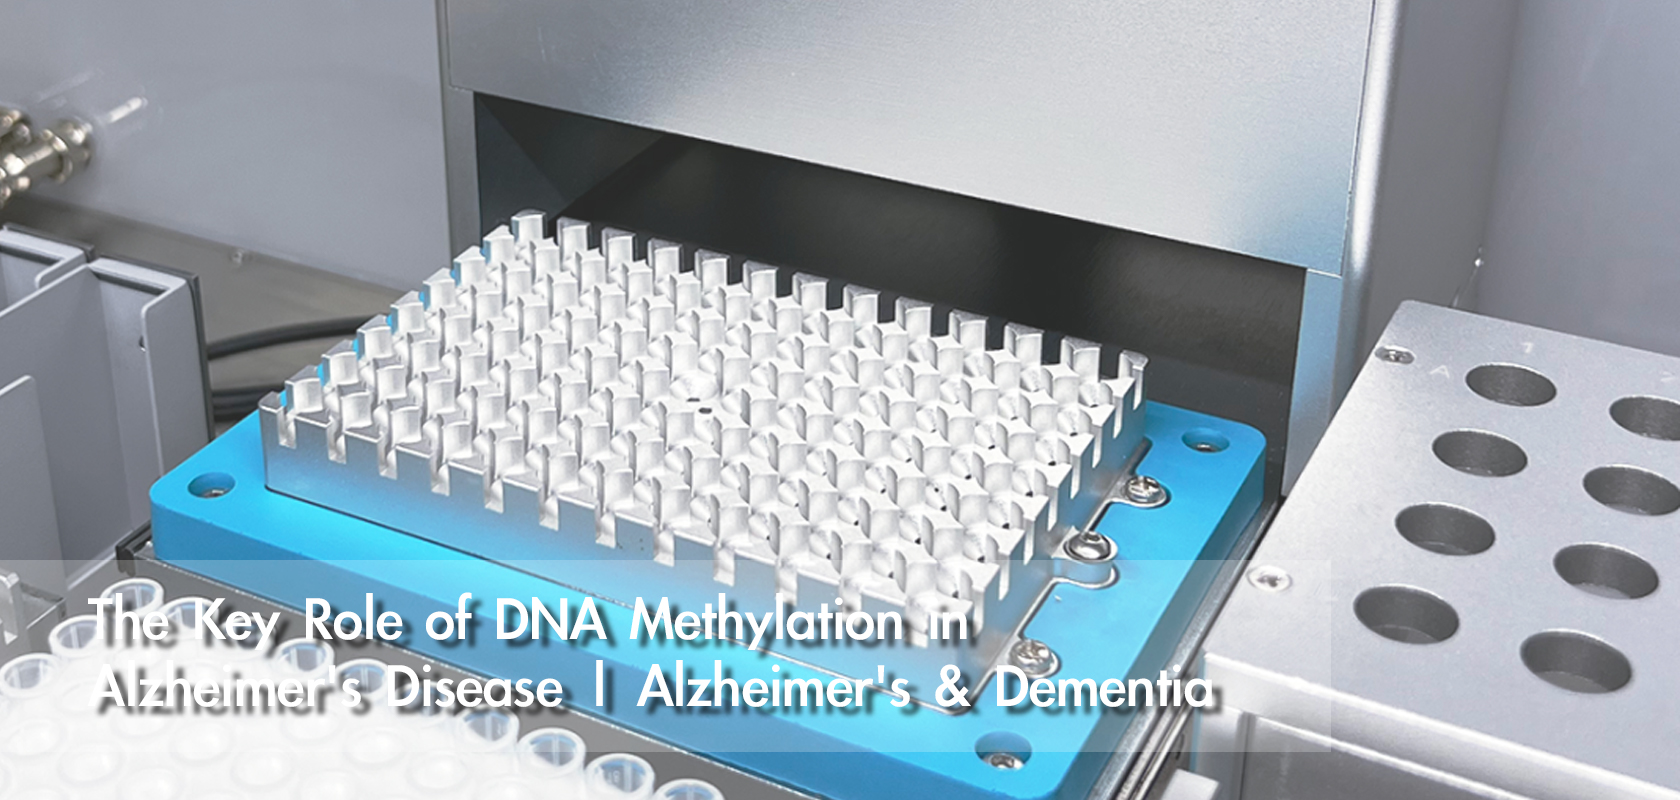 The Key Role of DNA Methylation in Alzheimer's Disease | Alzheimer's & Dementia